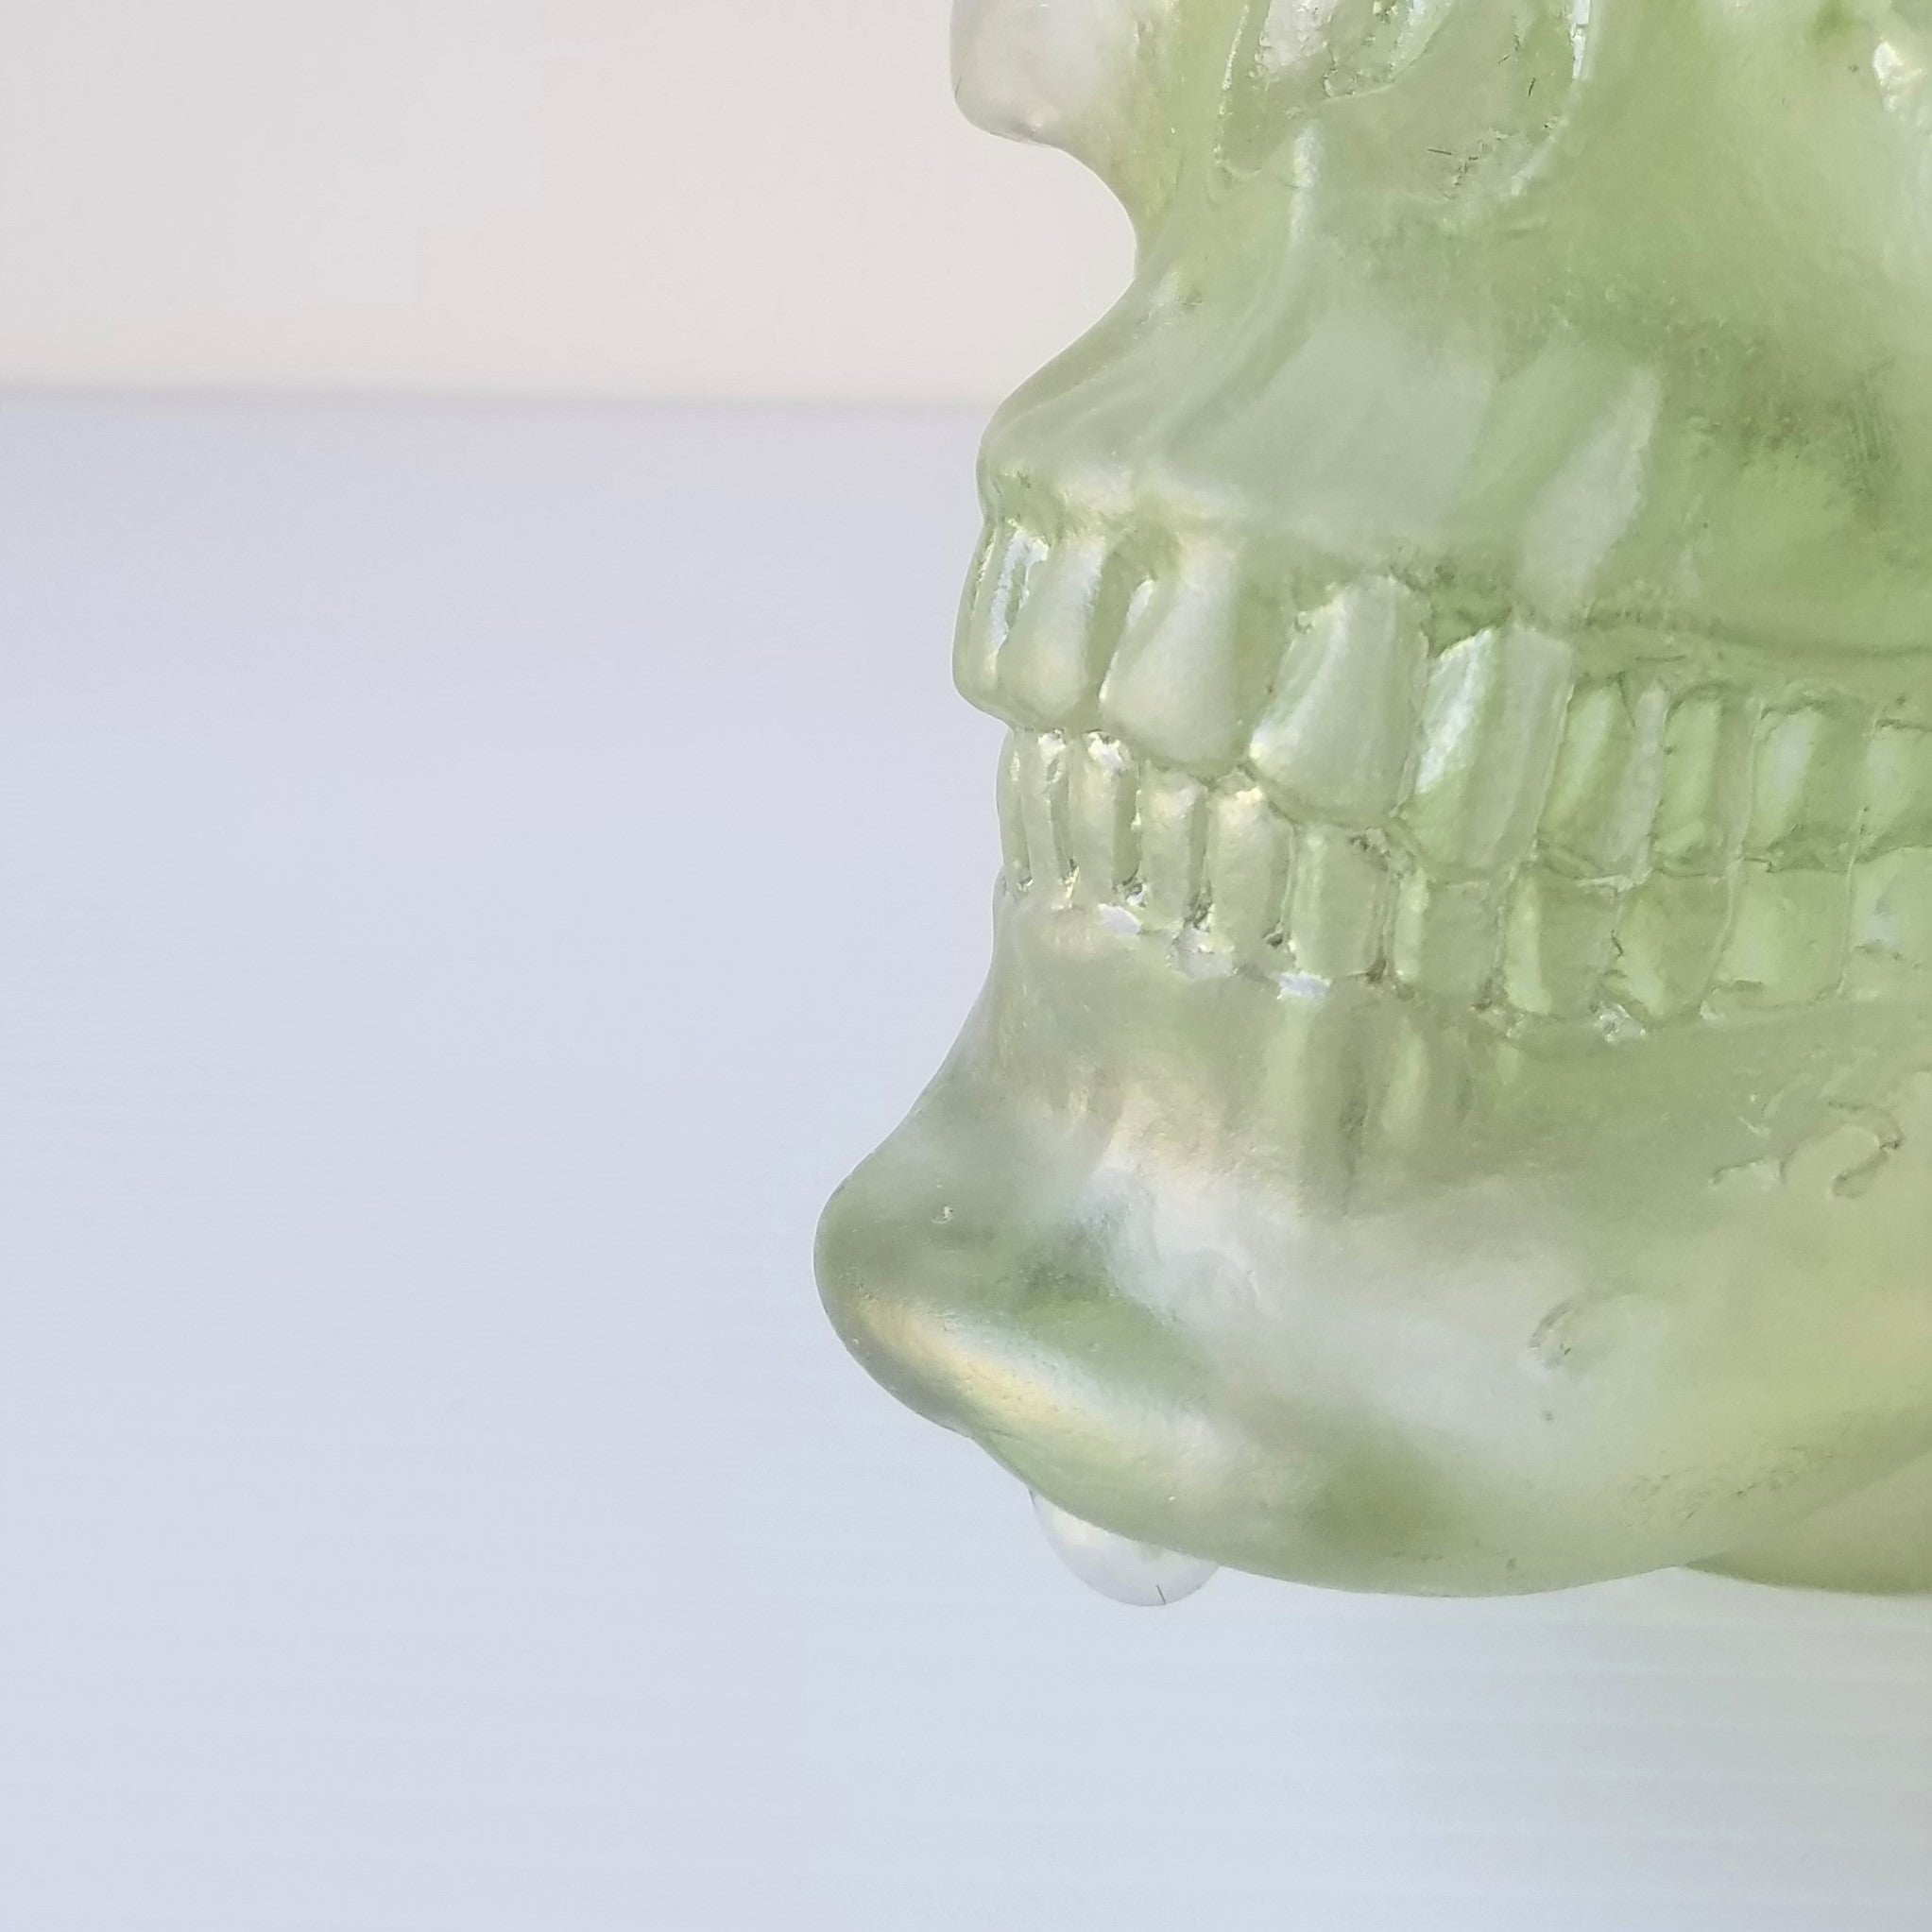 Paul Marioni Test Sand-Casted Glass Skull